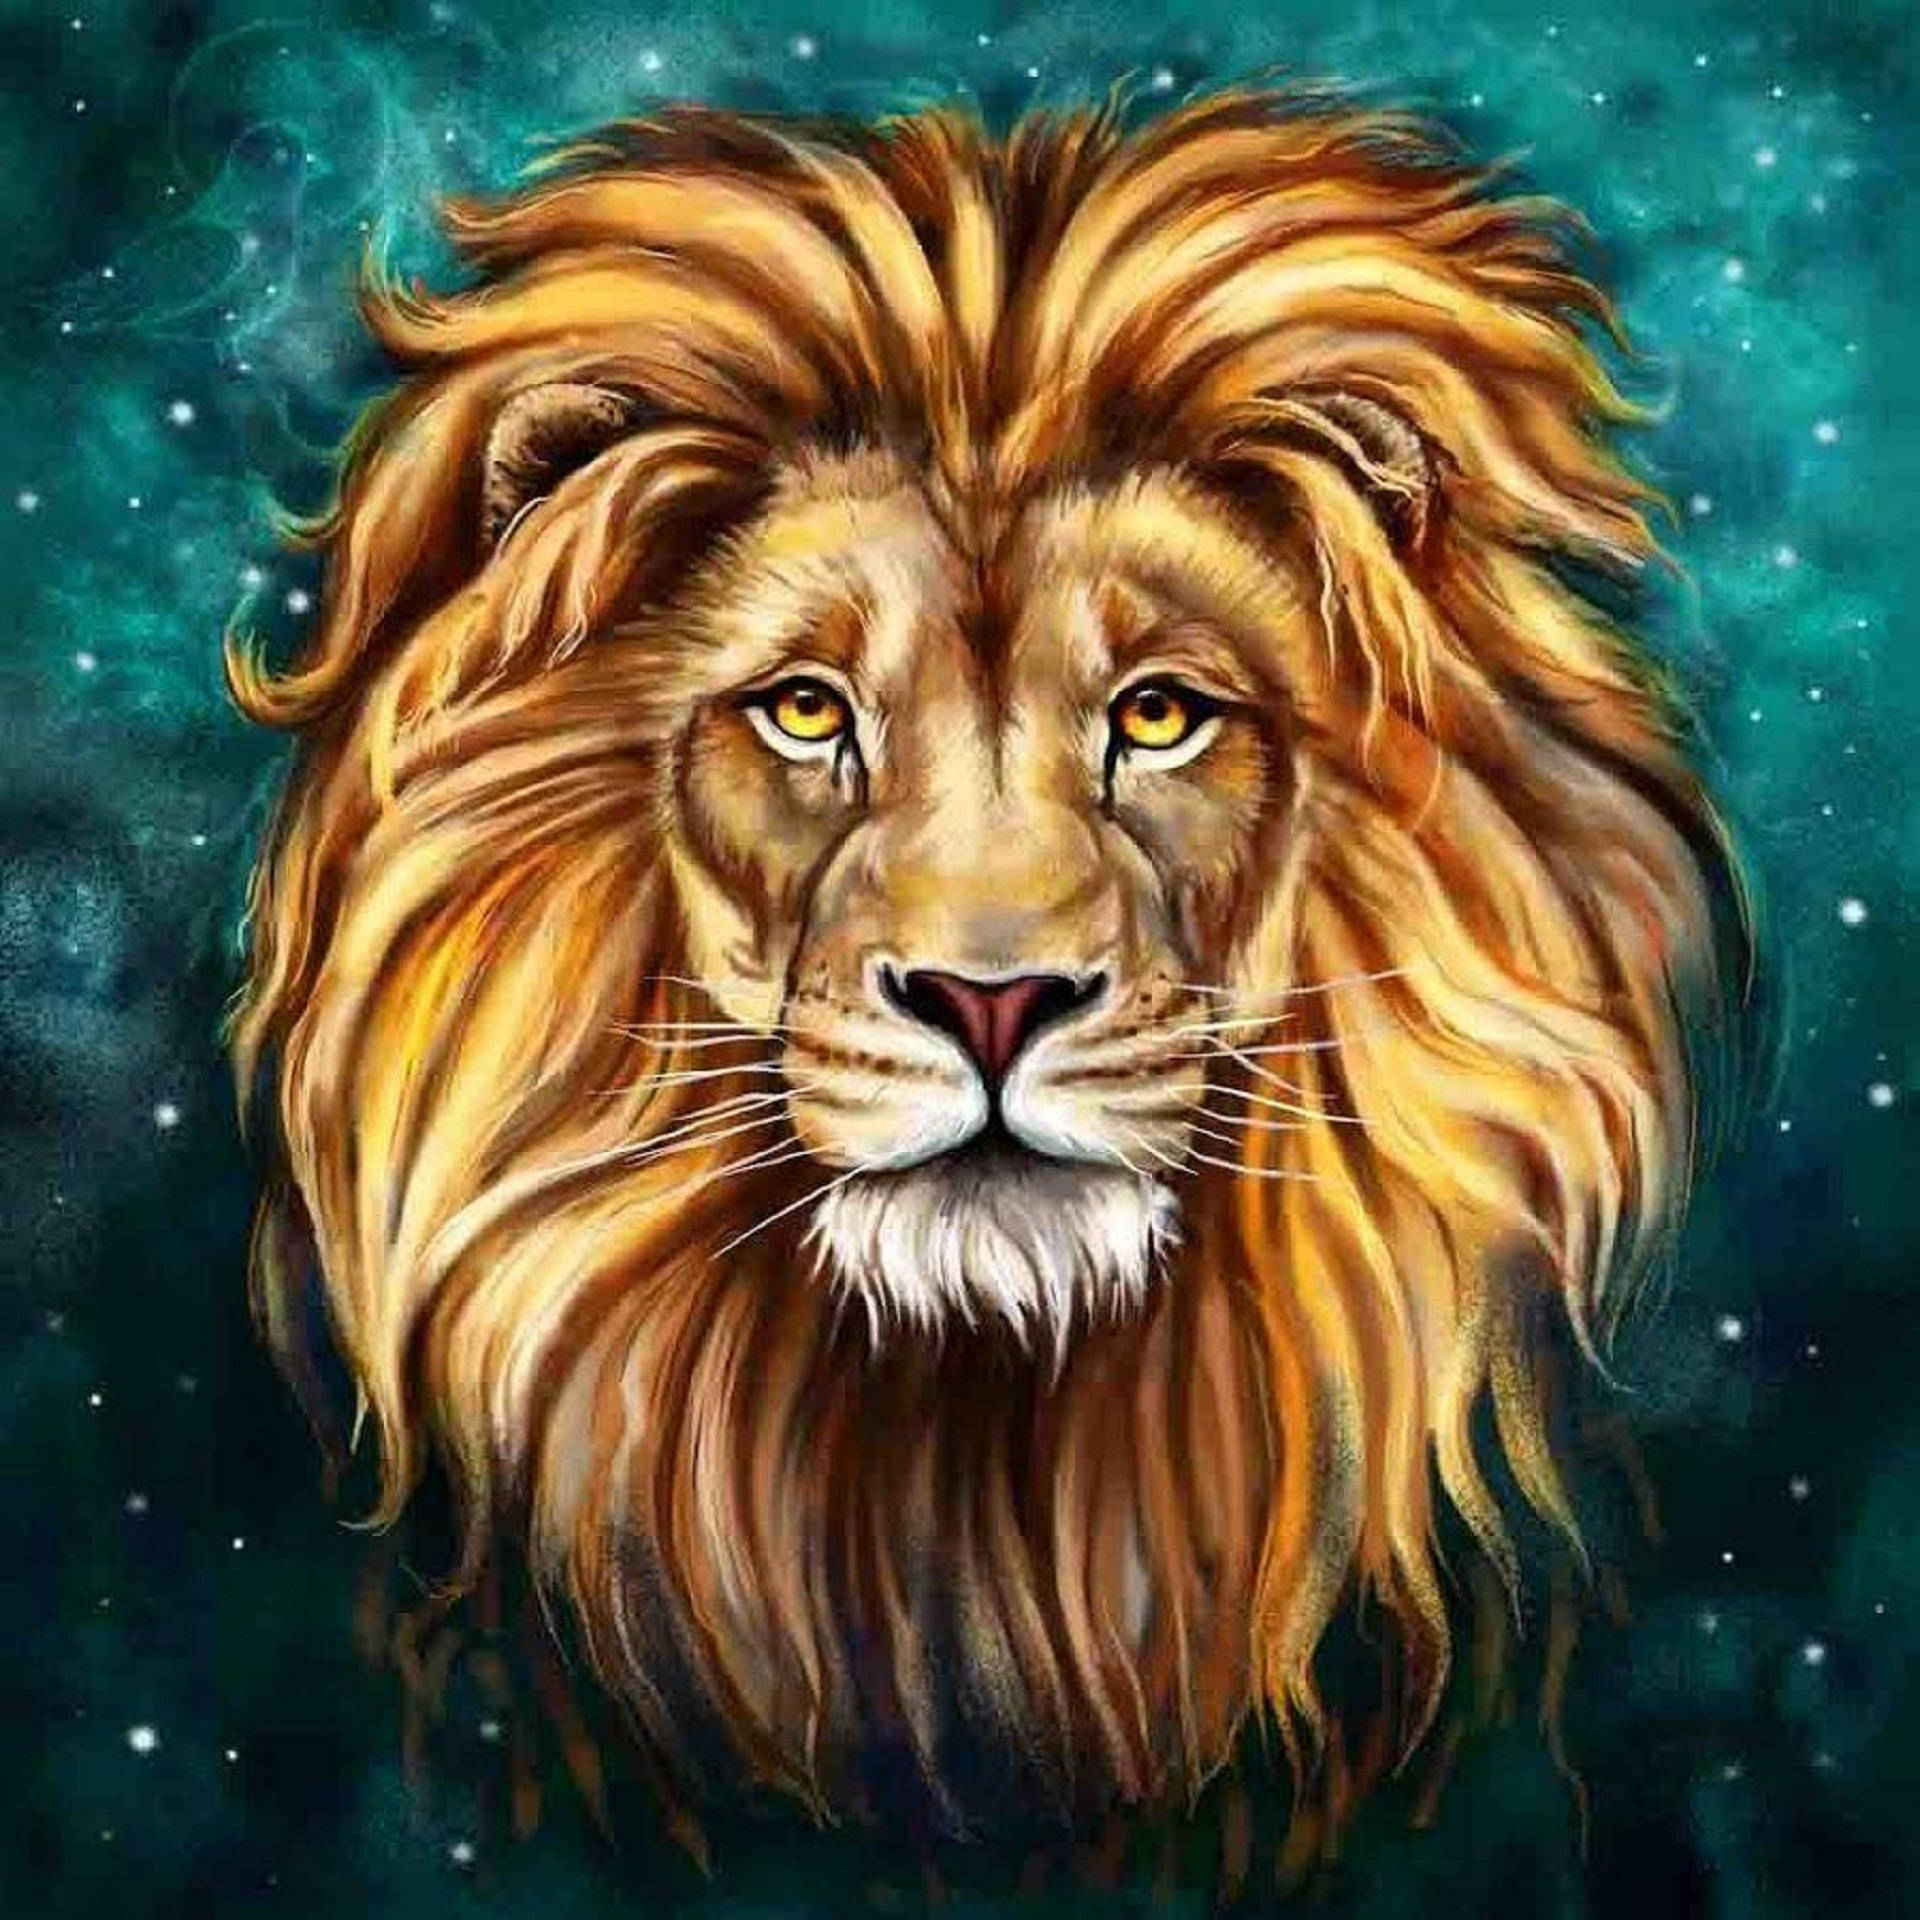 Lion Head With Stars Digital Art Background